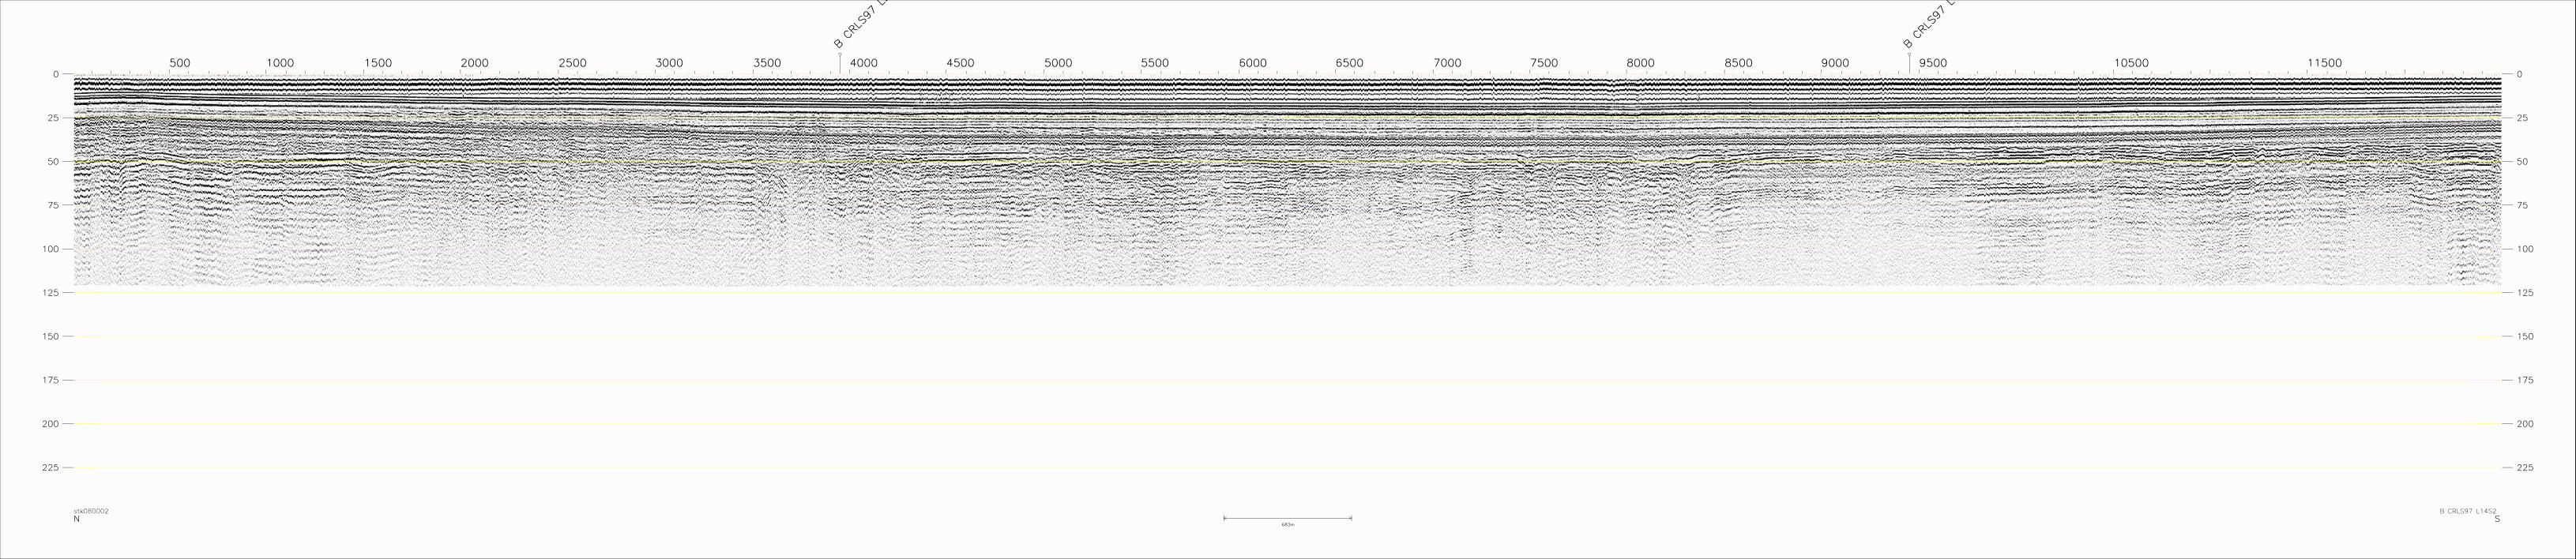 Seismic Reflection Profile Line No.: L14s2a (420668 bytes)